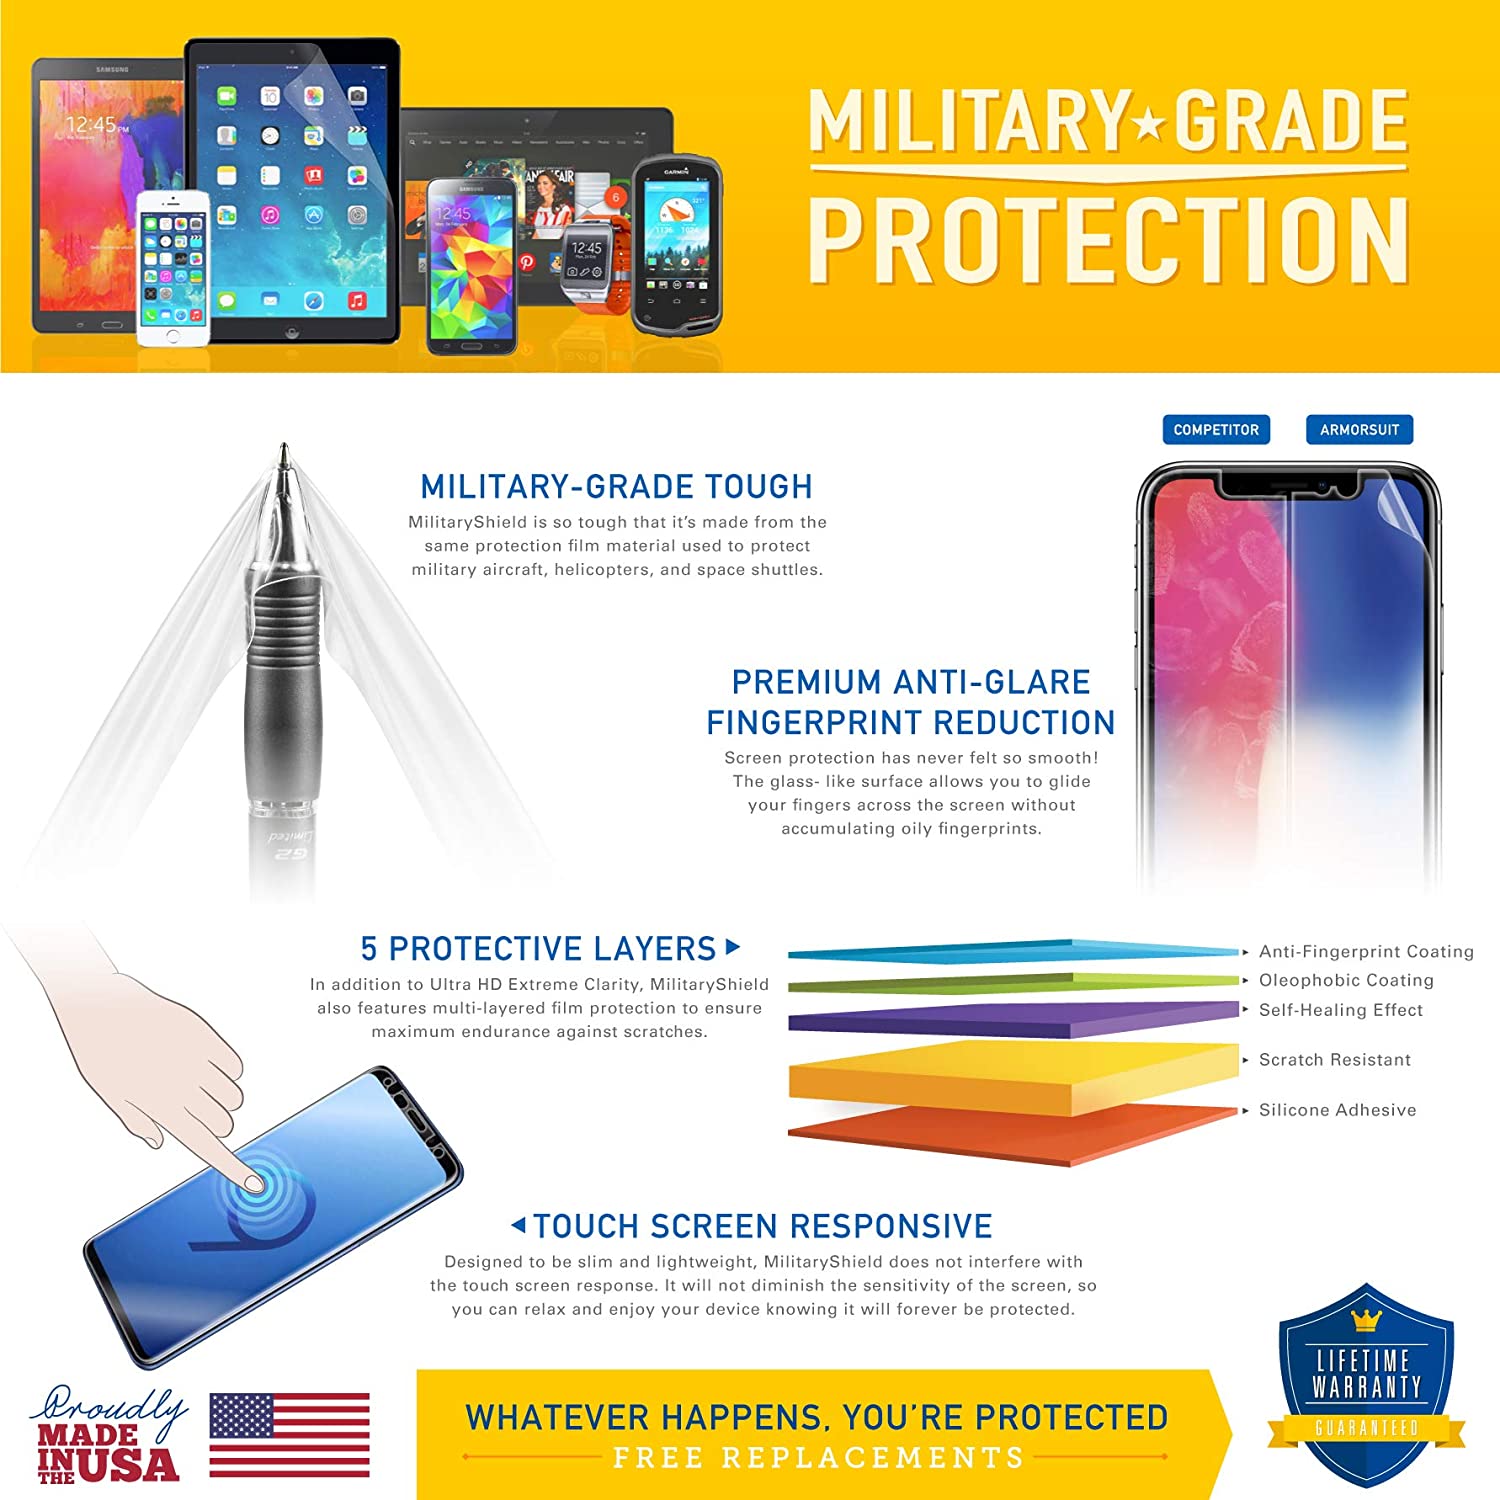 LG G7 ThinQ Full Body Skin Protector